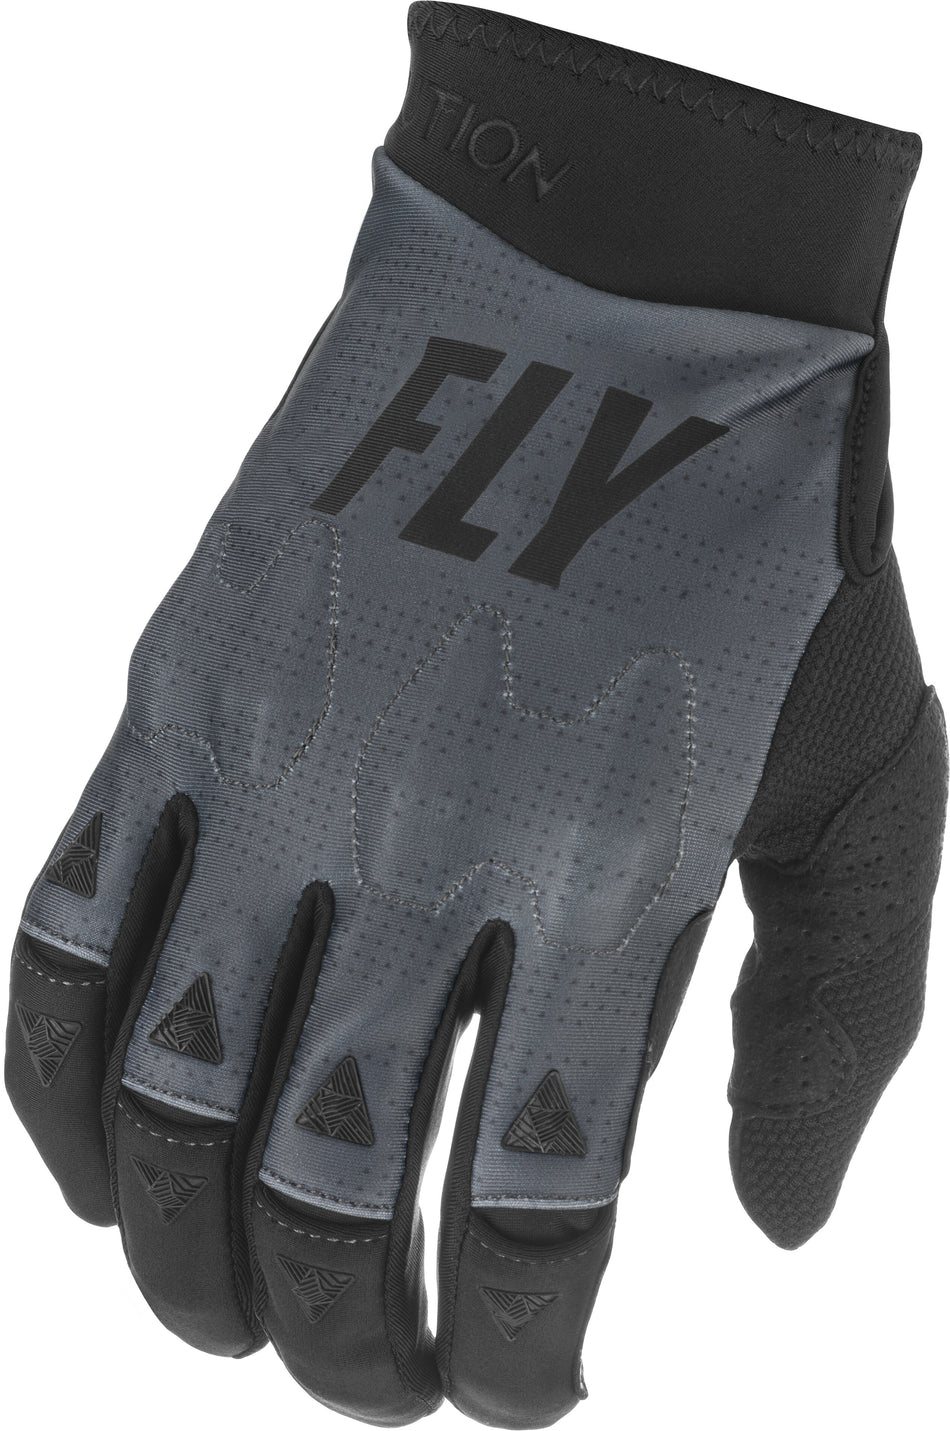 FLY RACING Evolution Dst Gloves Grey/Black/Stone Sz 07 374-11607